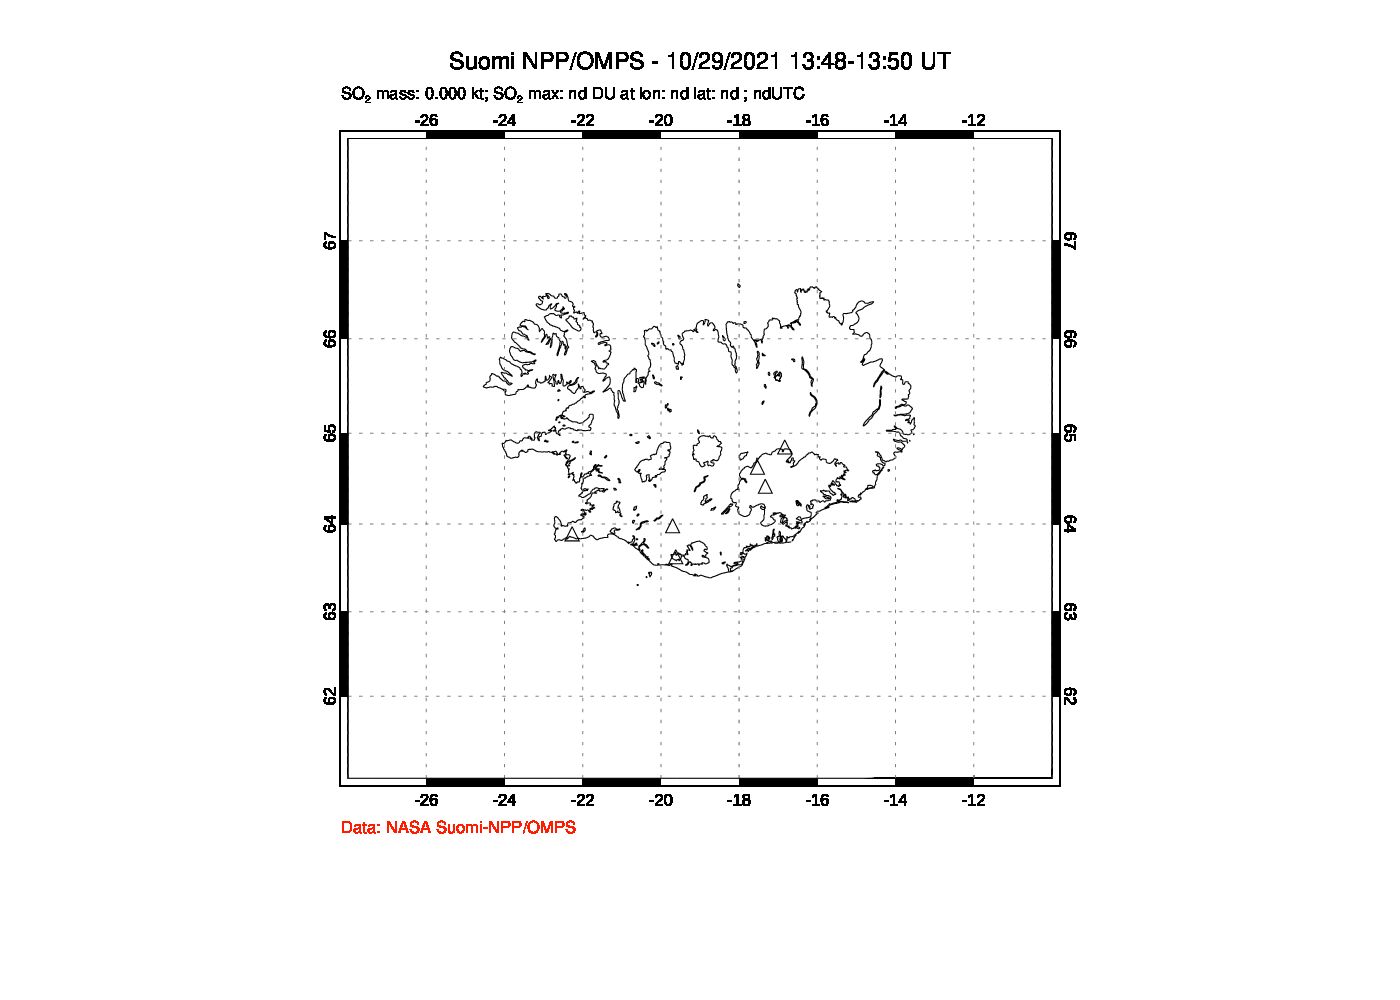 A sulfur dioxide image over Iceland on Oct 29, 2021.